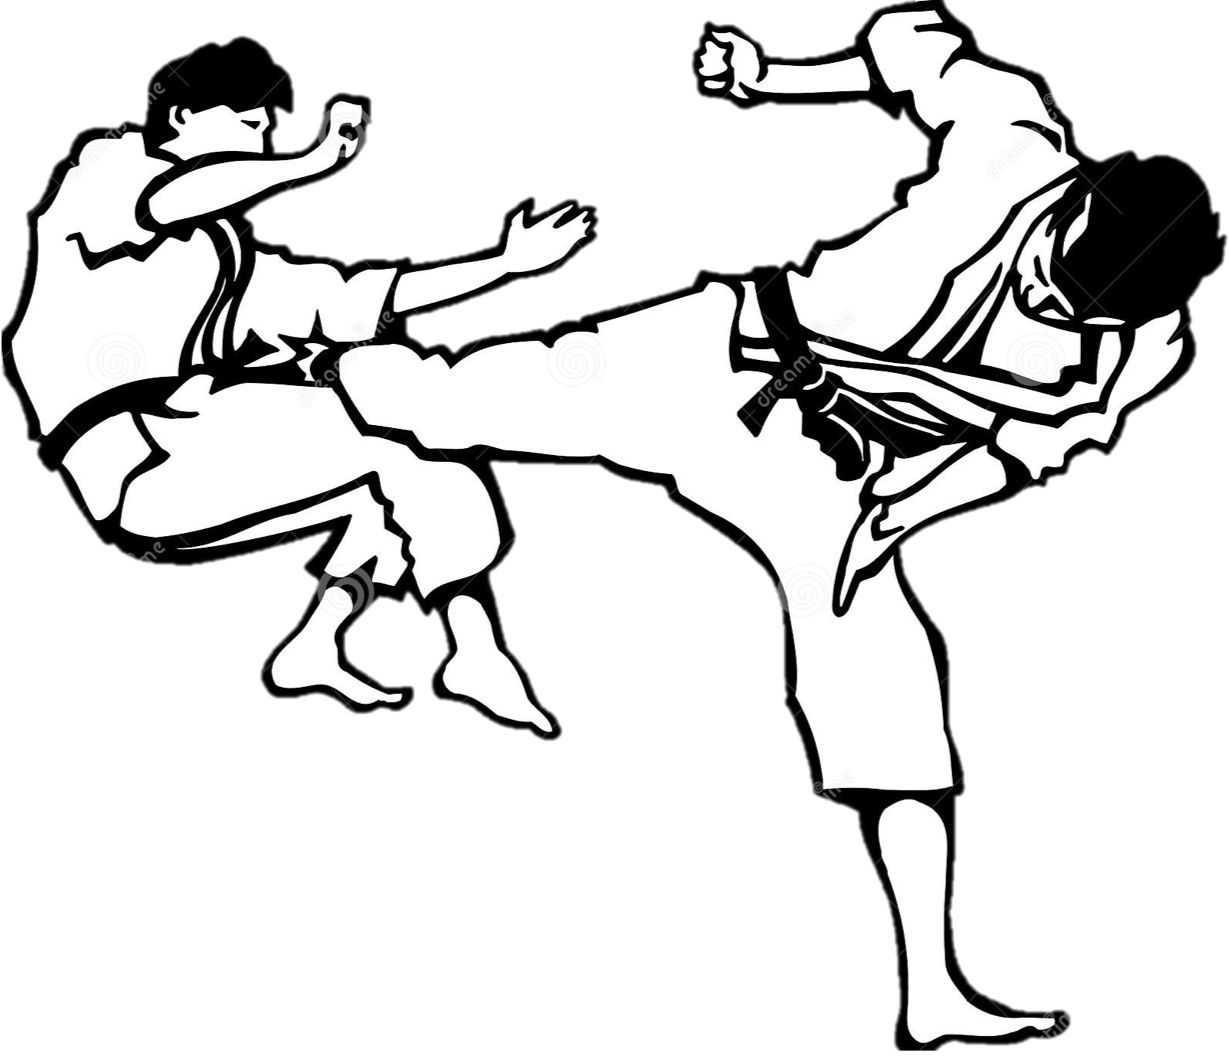 two men fighting